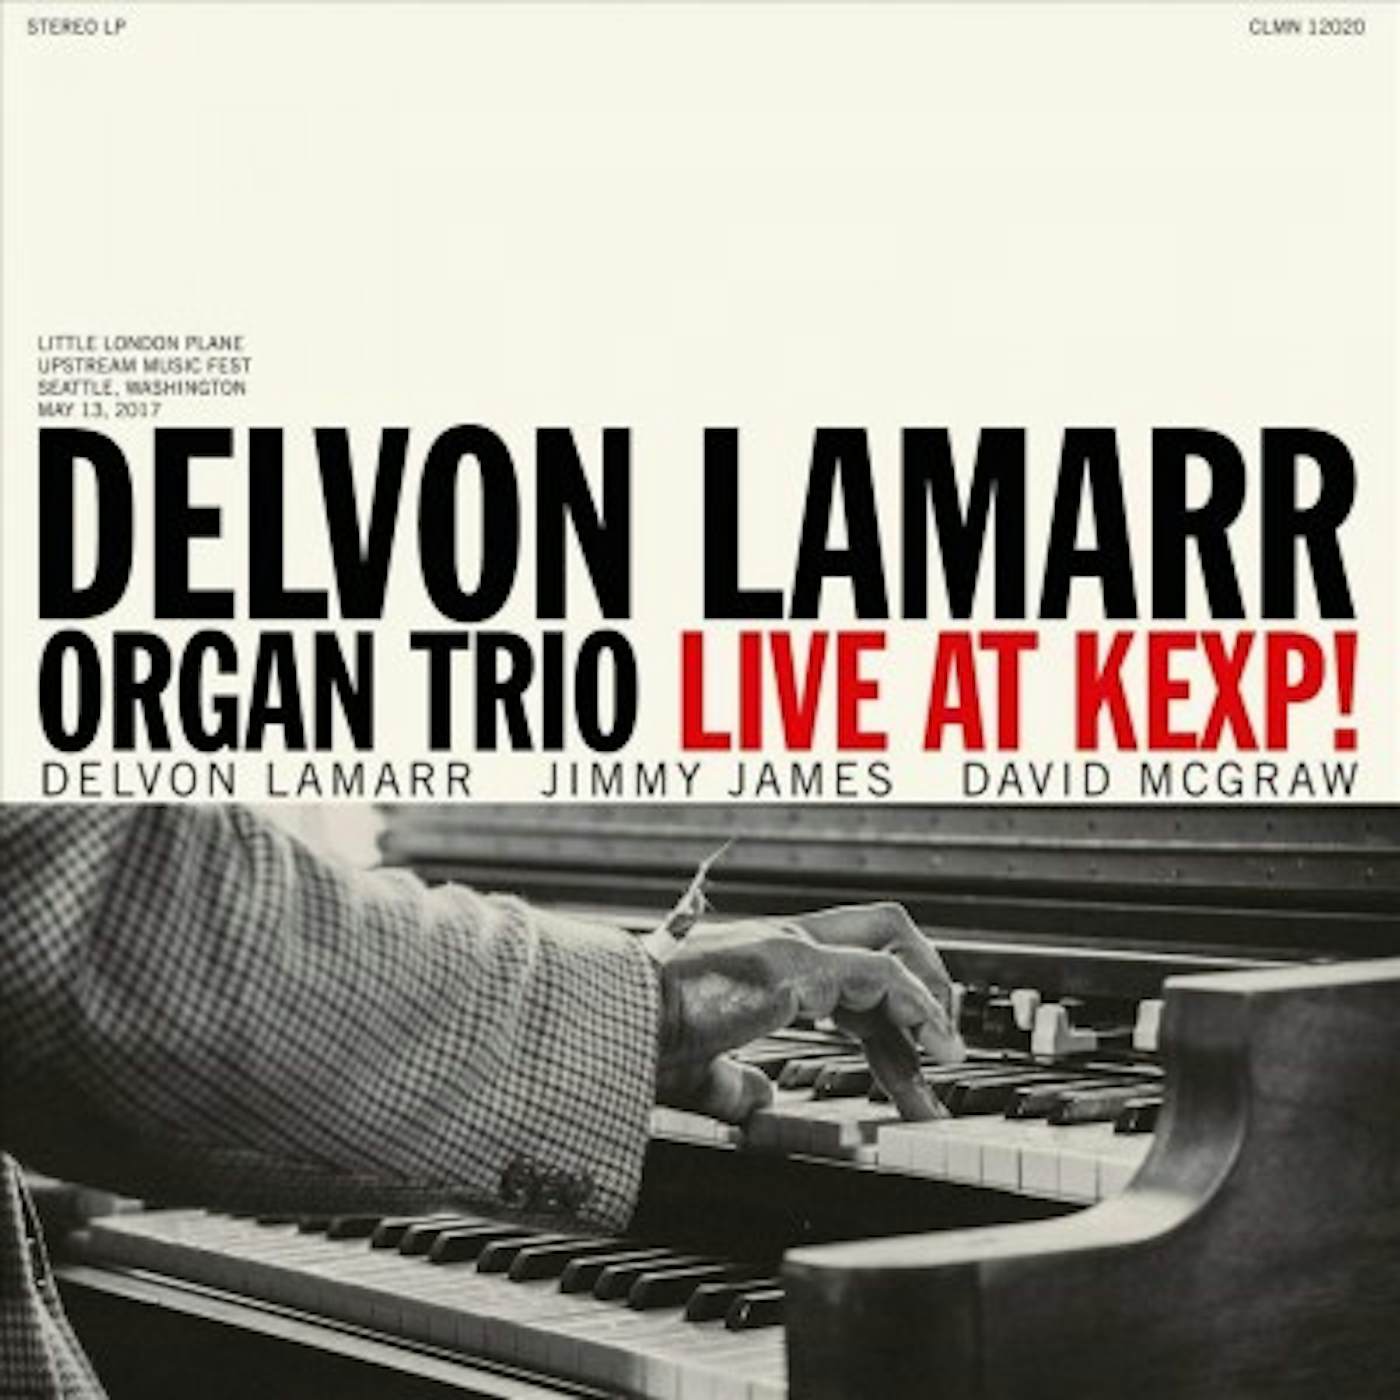 Delvon Lamarr Organ Trio LIVE AT KEXP! CD